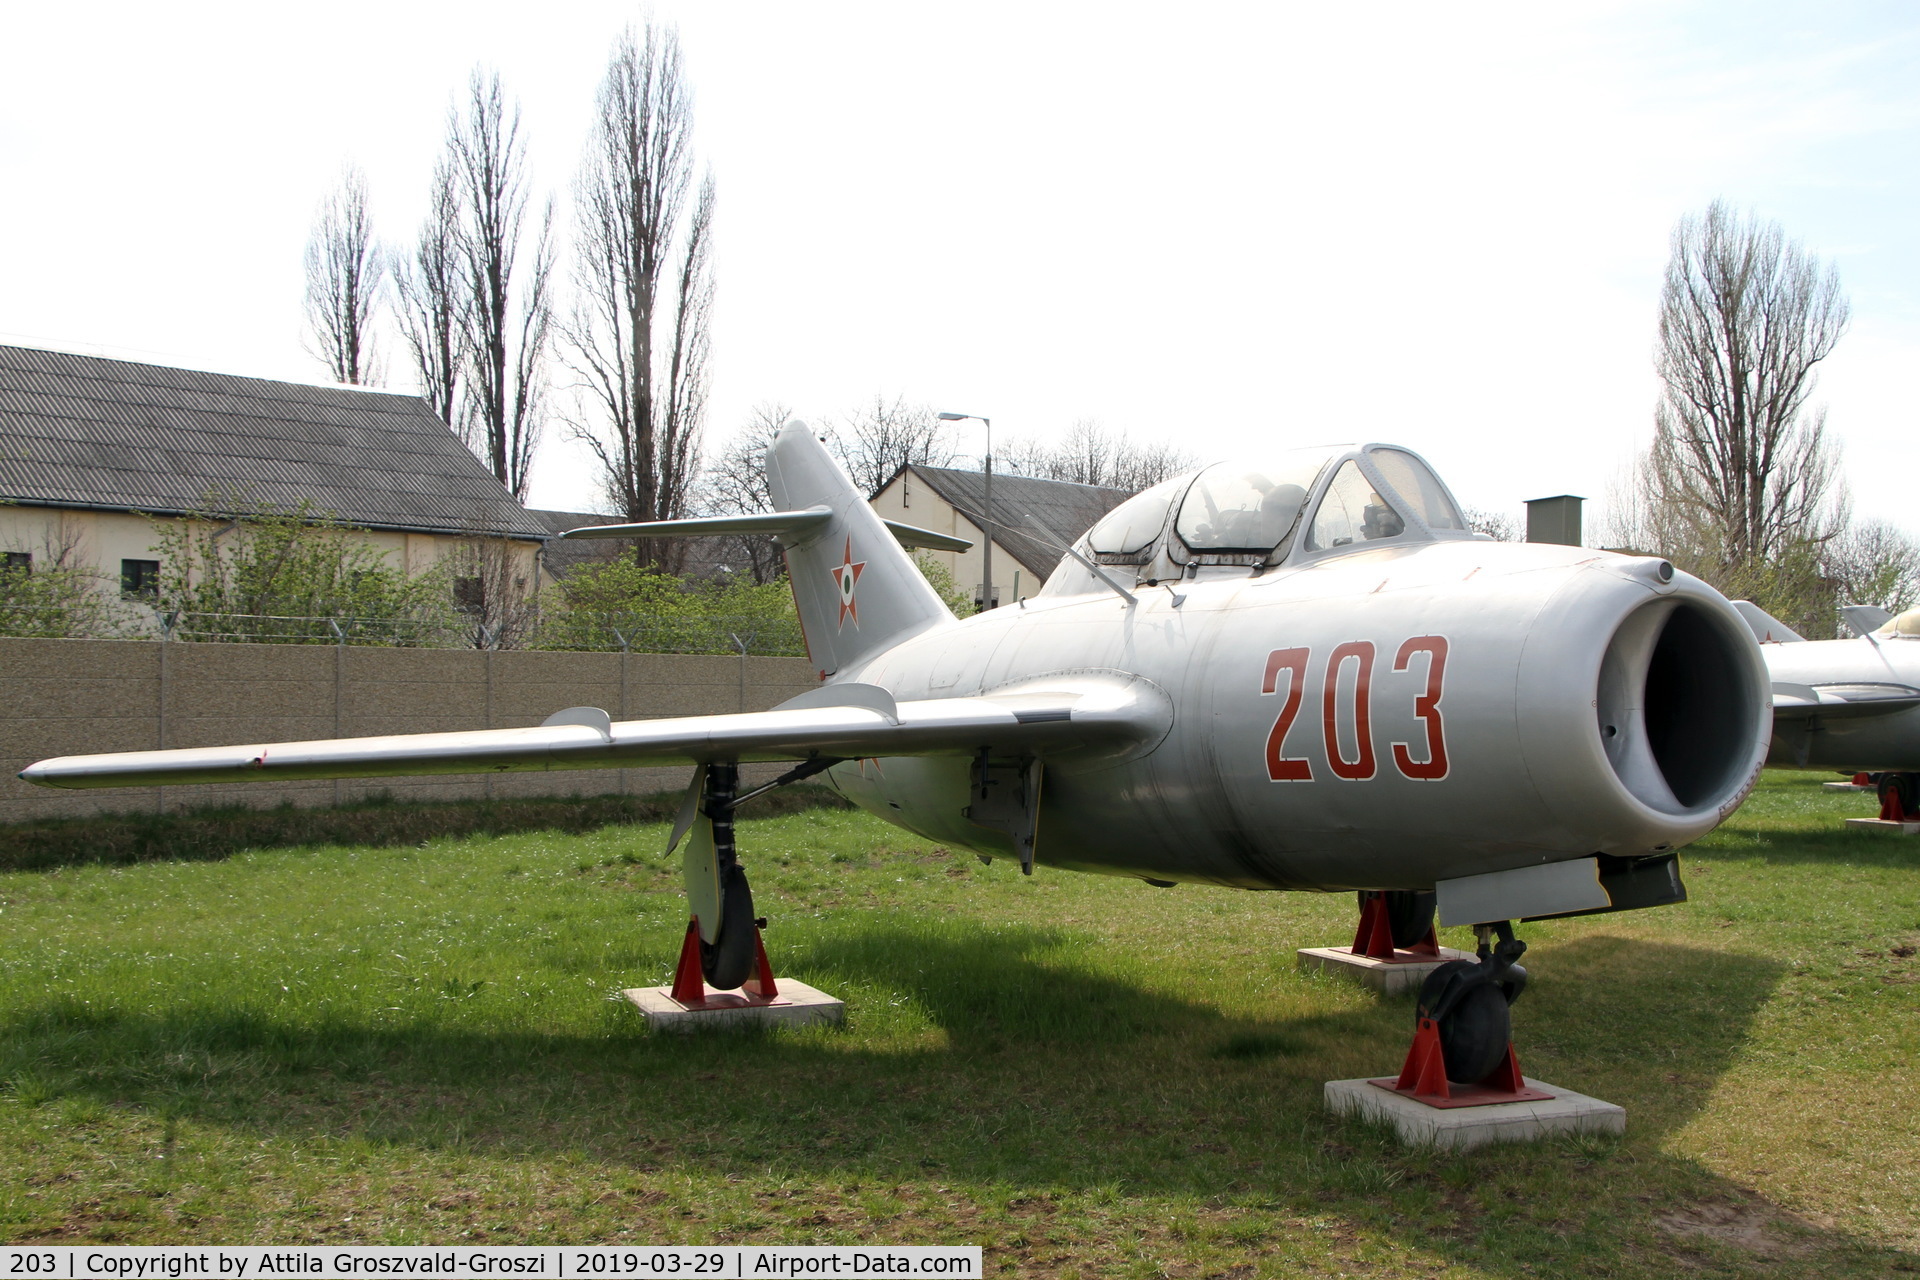 203, 1955 Mikoyan-Gurevich MiG-15UTI C/N 10993203, RepTár. Szolnok aviation history museum, Hungary